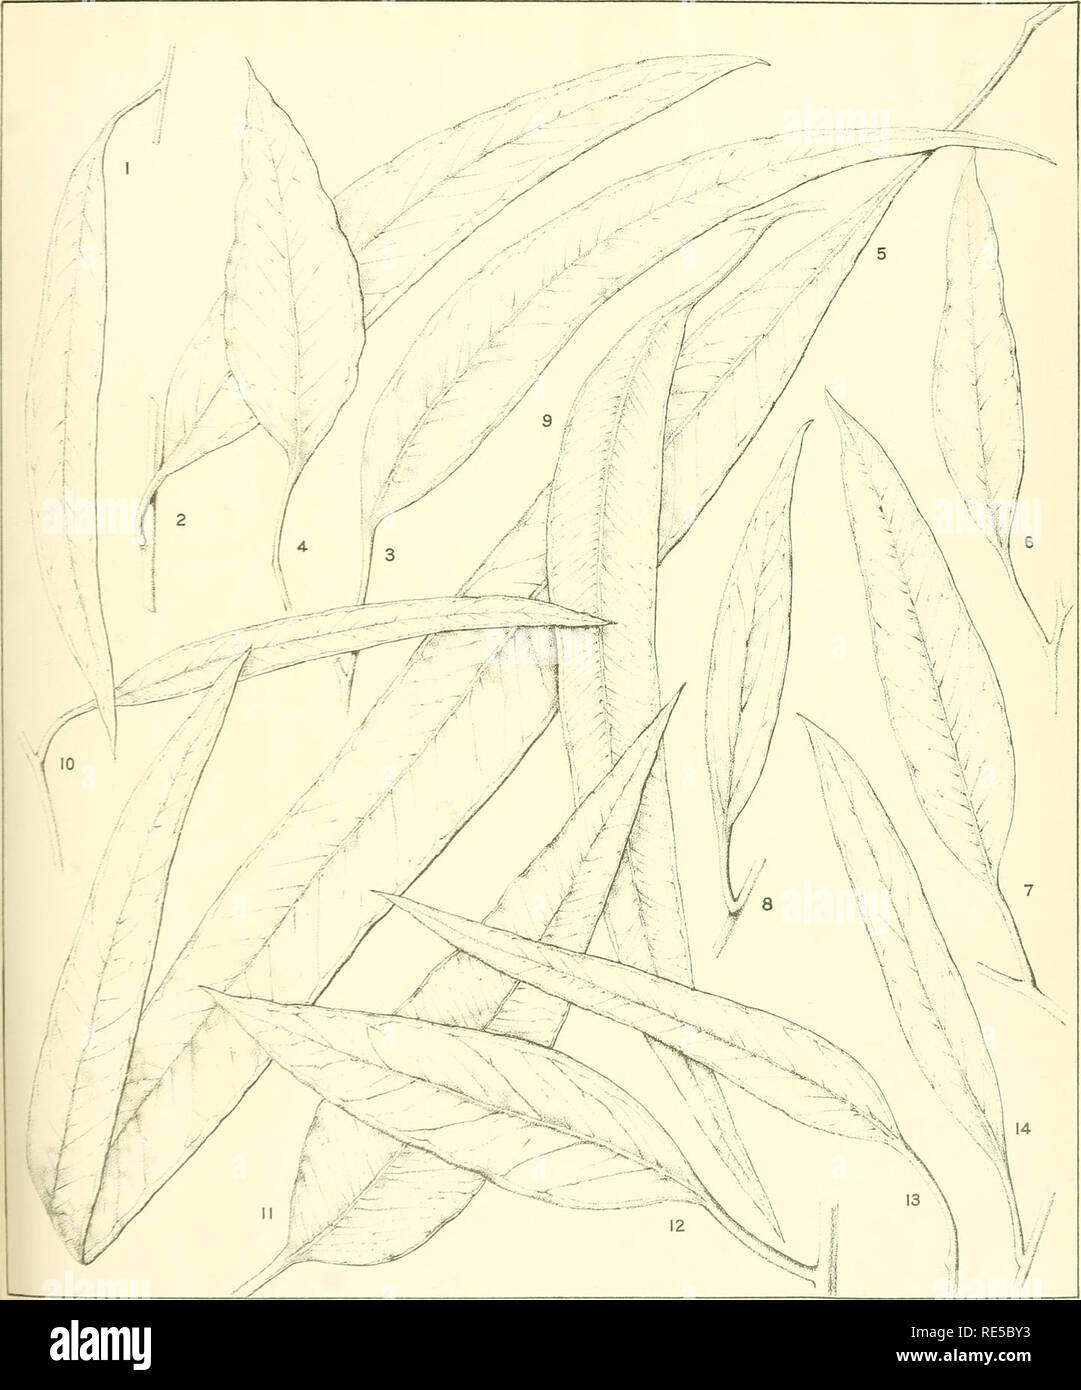 . A critical revision of the genus Eucalyptus. Eucalyptus. Crit. Rev. Eucalyptus. Pl. 273.. MATURE LEAVES. (More mature than previously figured. Continued on Plate 274). EUCALYPTUS AGGREGATA Deane and Maiden, (7). E. ALBENS Miq. (2). E BAUERIANA Schauee. (4). ALEYI Maiden. {&quot;). E. FOECU] DA Schauer. (10). E CAESIA Benth. (13). M Flocufon del eMil-h. E. DALRYMPLEANA Maiden. (5). E. DIVES Schauer. (8) E. FICIFOLIA F.v.M. (7 7). E. COCCIFERA Hook./. (74). E. AMPLIFOLIA Naud. (3). E. BEHRIANA F.v.M. (6) E. EXIMIA Schauer. (9). E. GROSSA F.v.M. (12).. Please note that these images are extracte Stock Photo